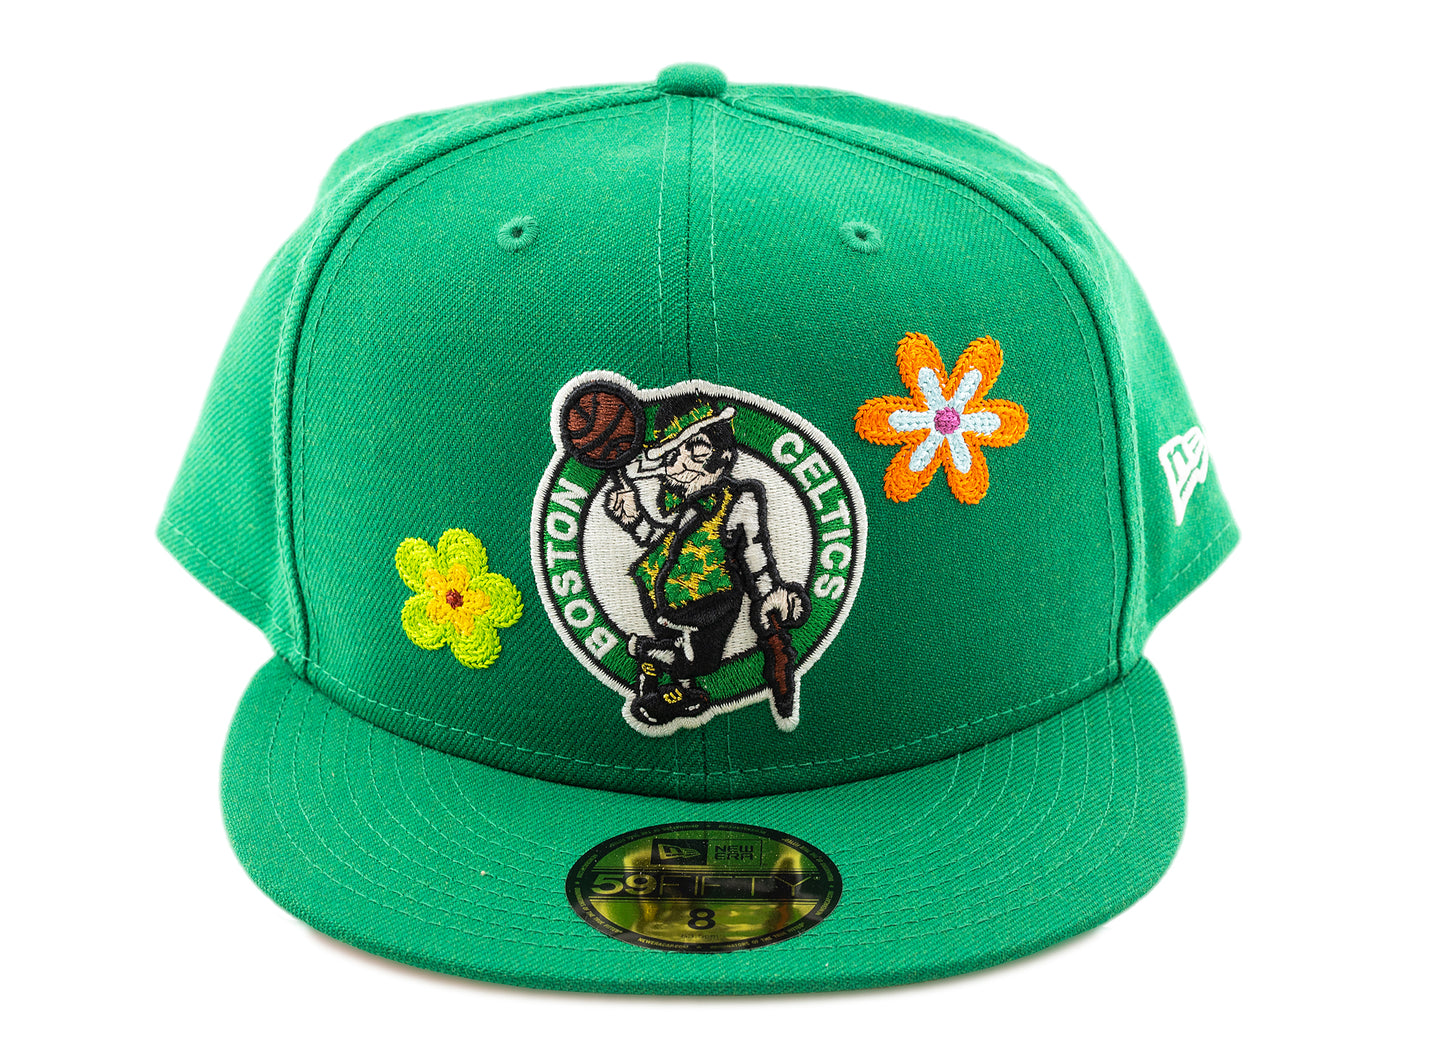 New Era Boston Celtics Floral Fitted Hat